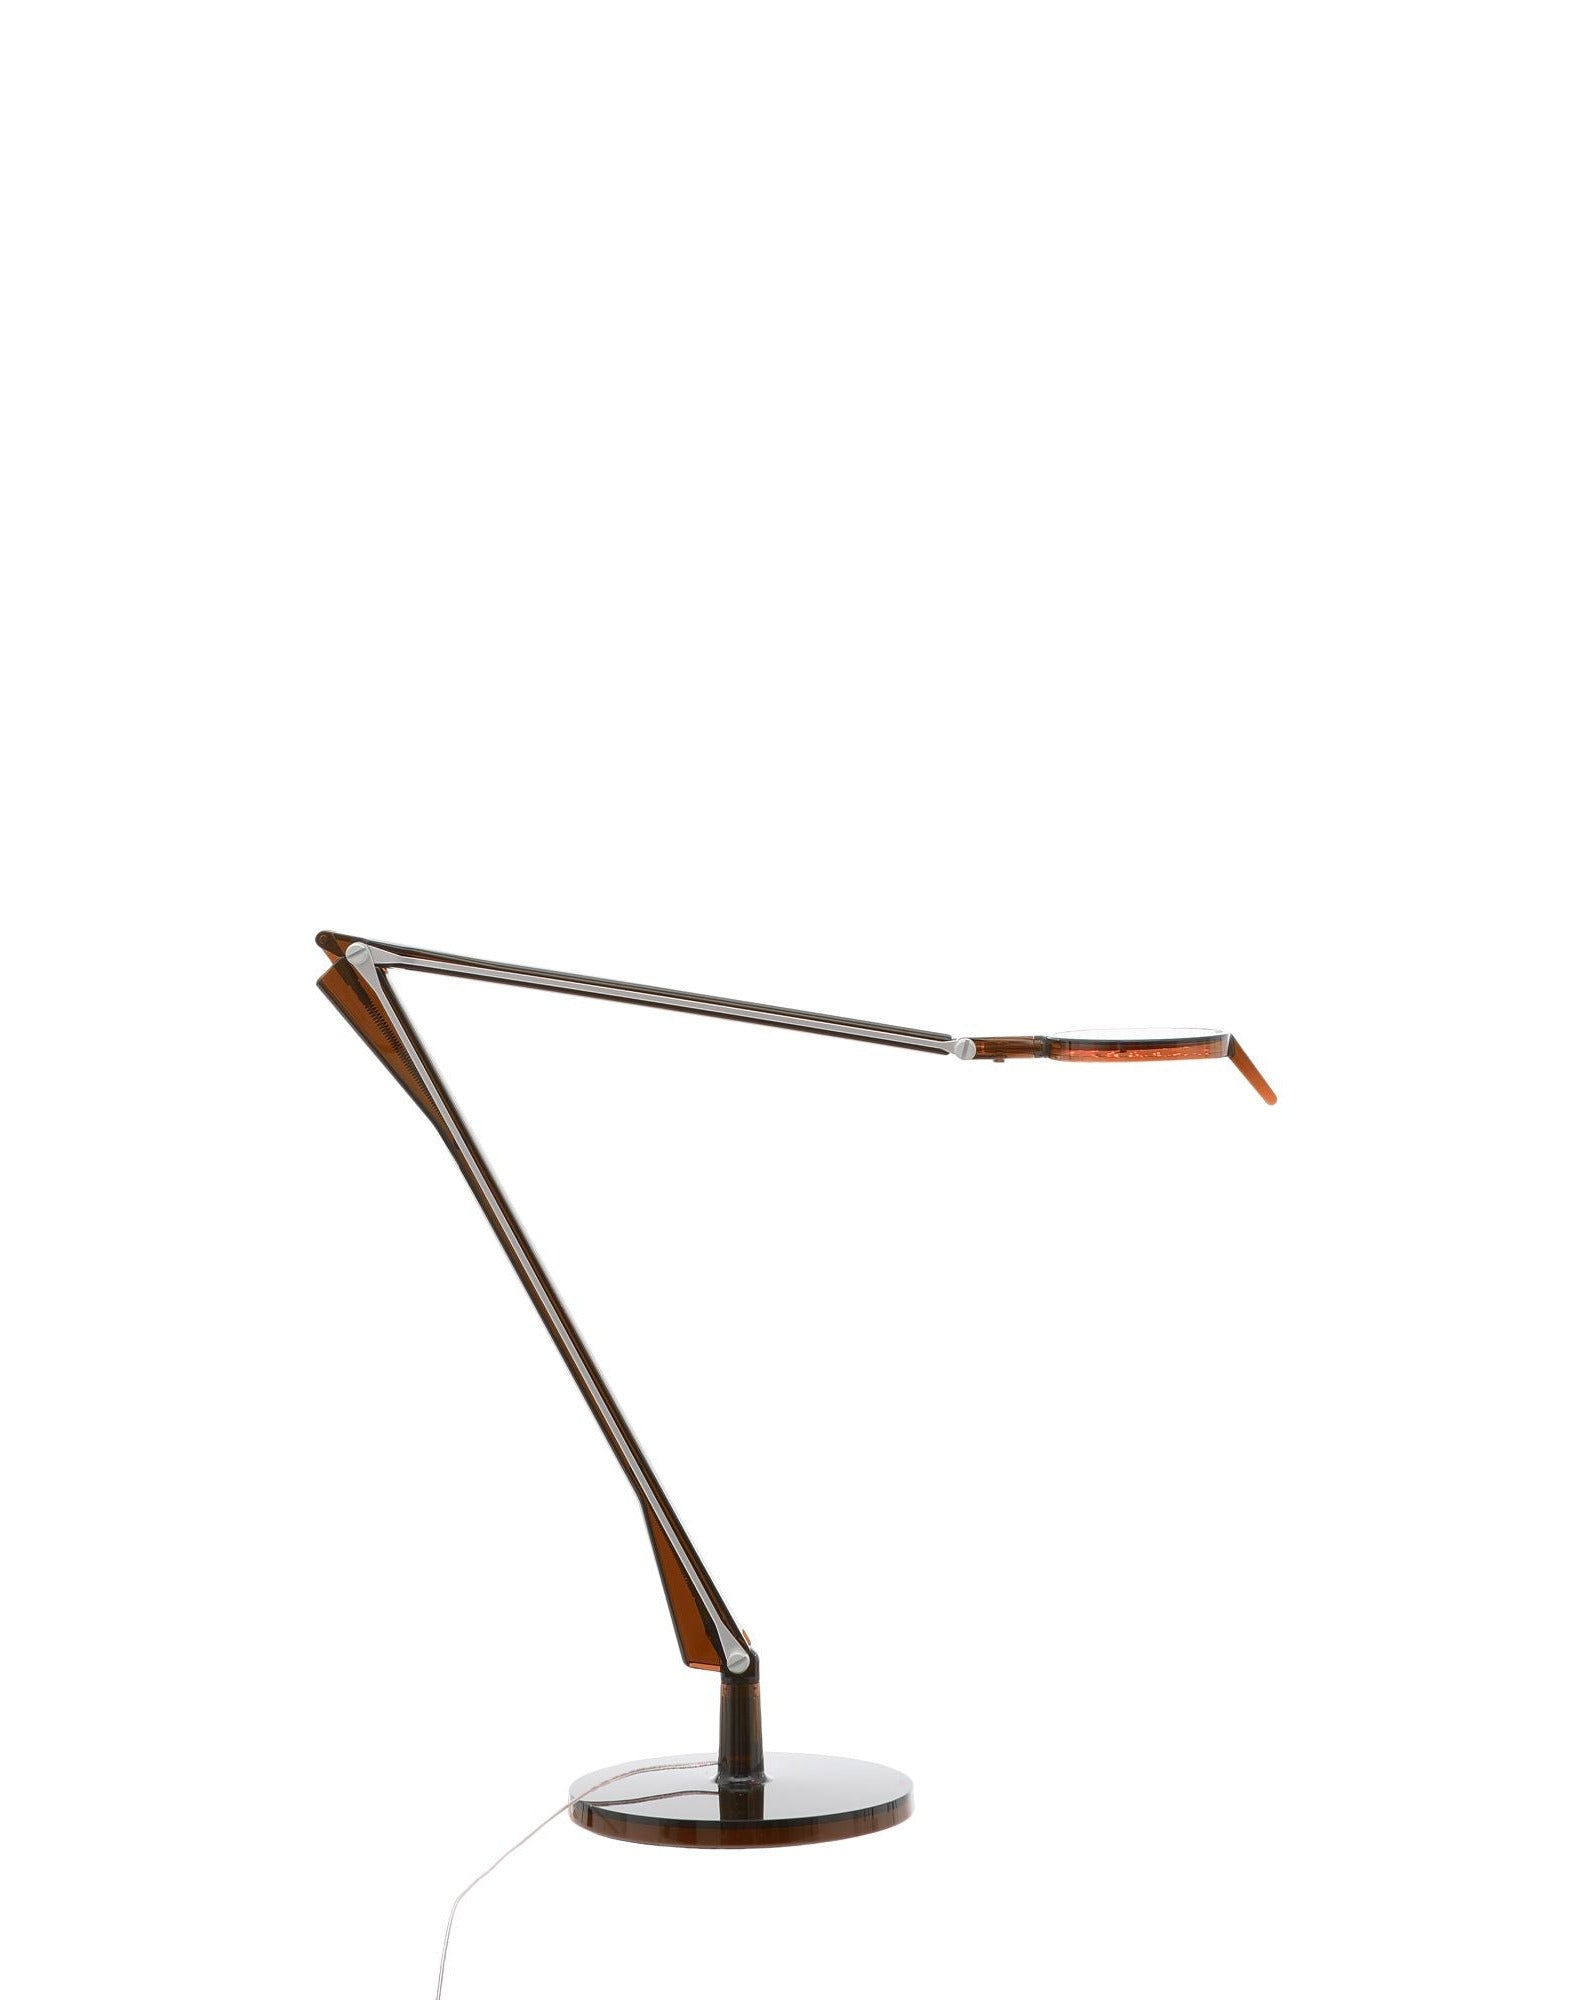 Aledin Tec Desk Lamp with Dimmer